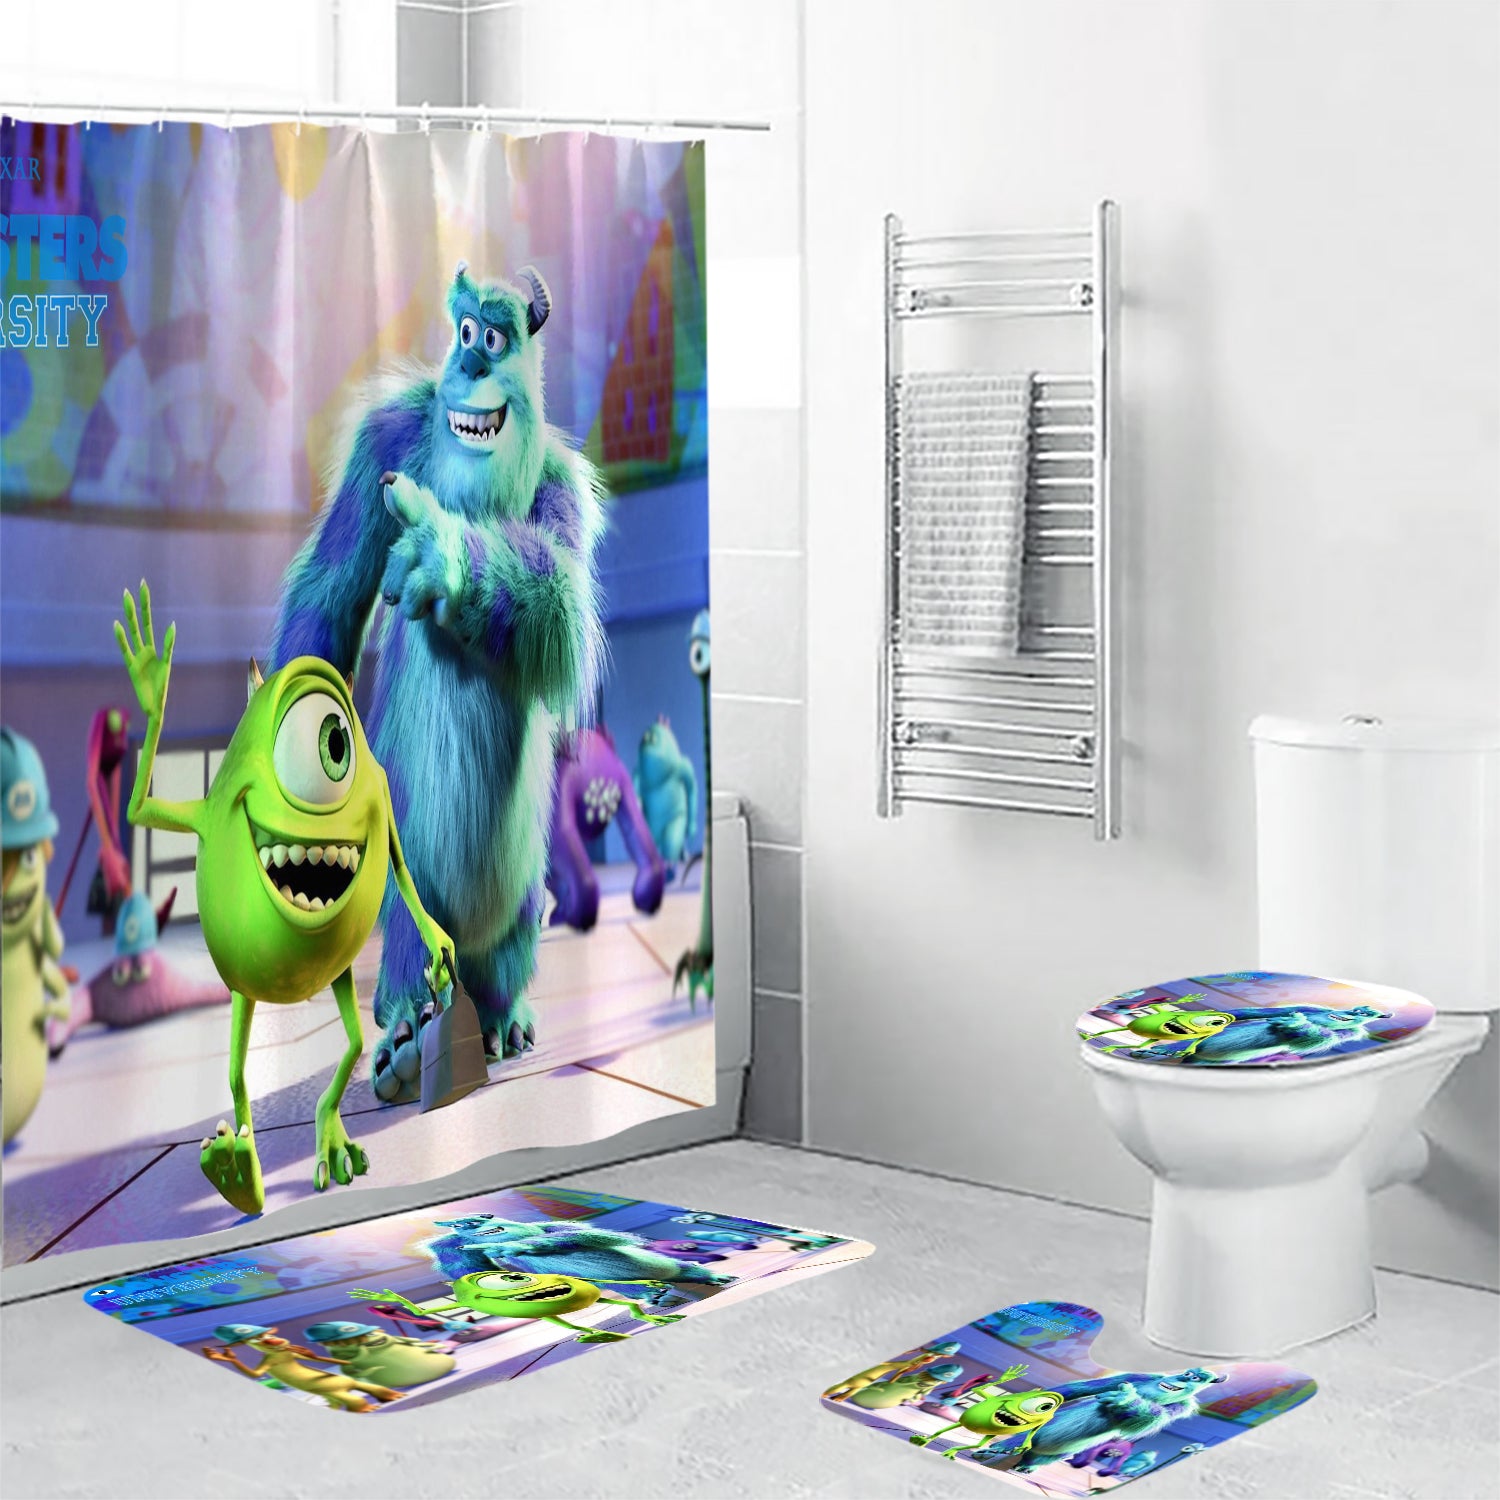 Characters v18 Monsters Inc Monsters University Movie Disney Pixar Waterproof Shower Curtain Non-Slip Toilet Lid Cover Bath Mat - Bathroom Set